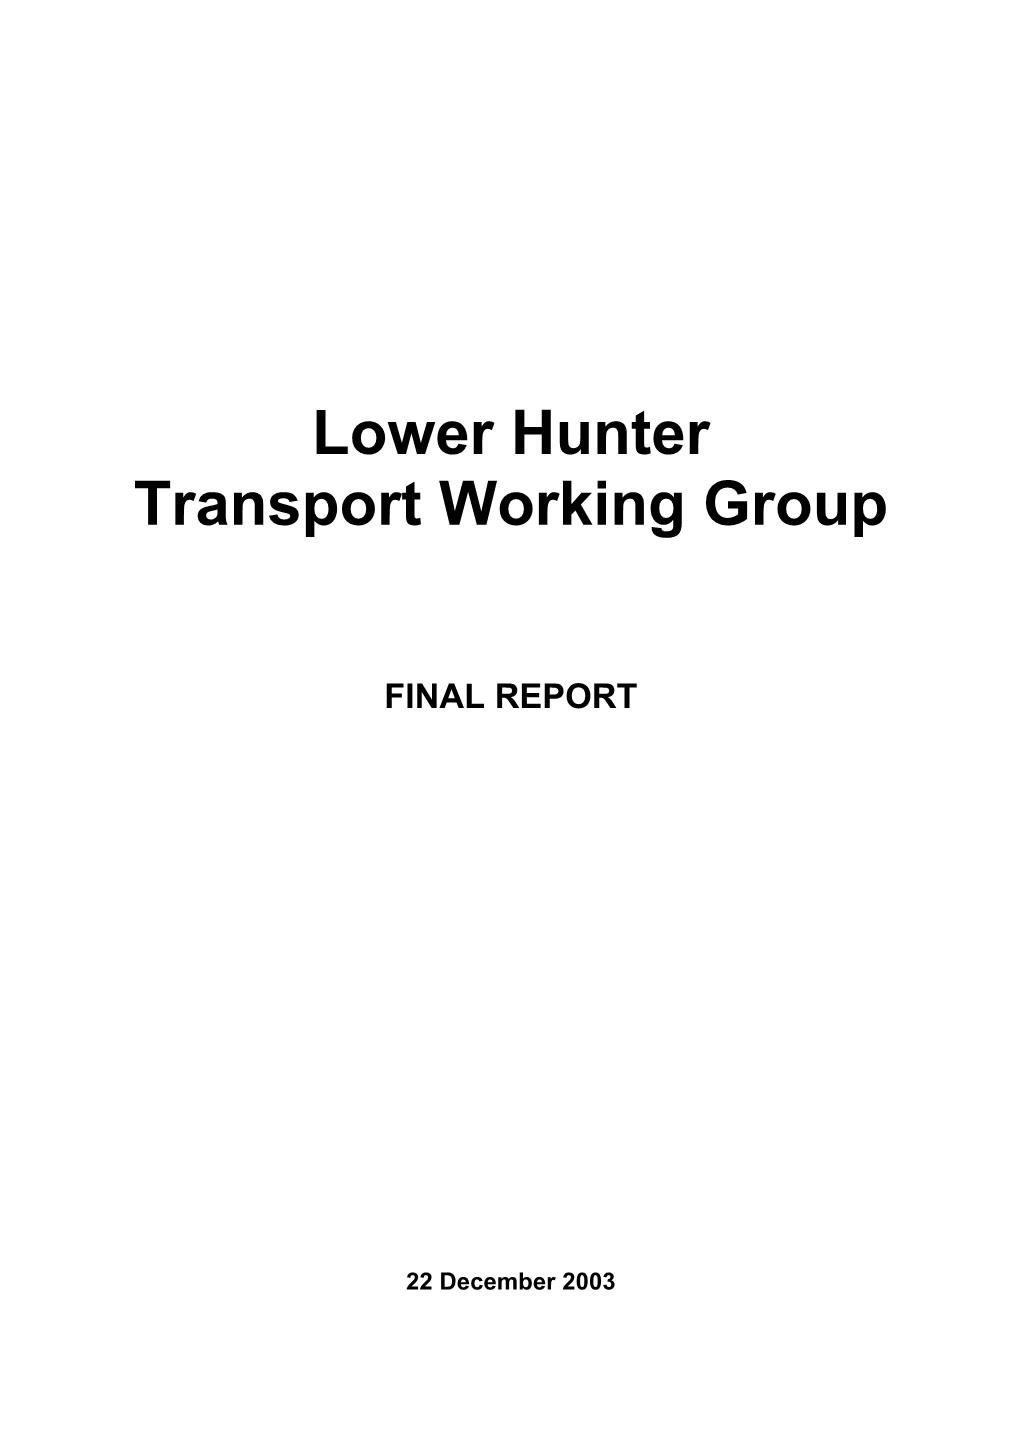 Lower Hunter Transport Working Group Final Report